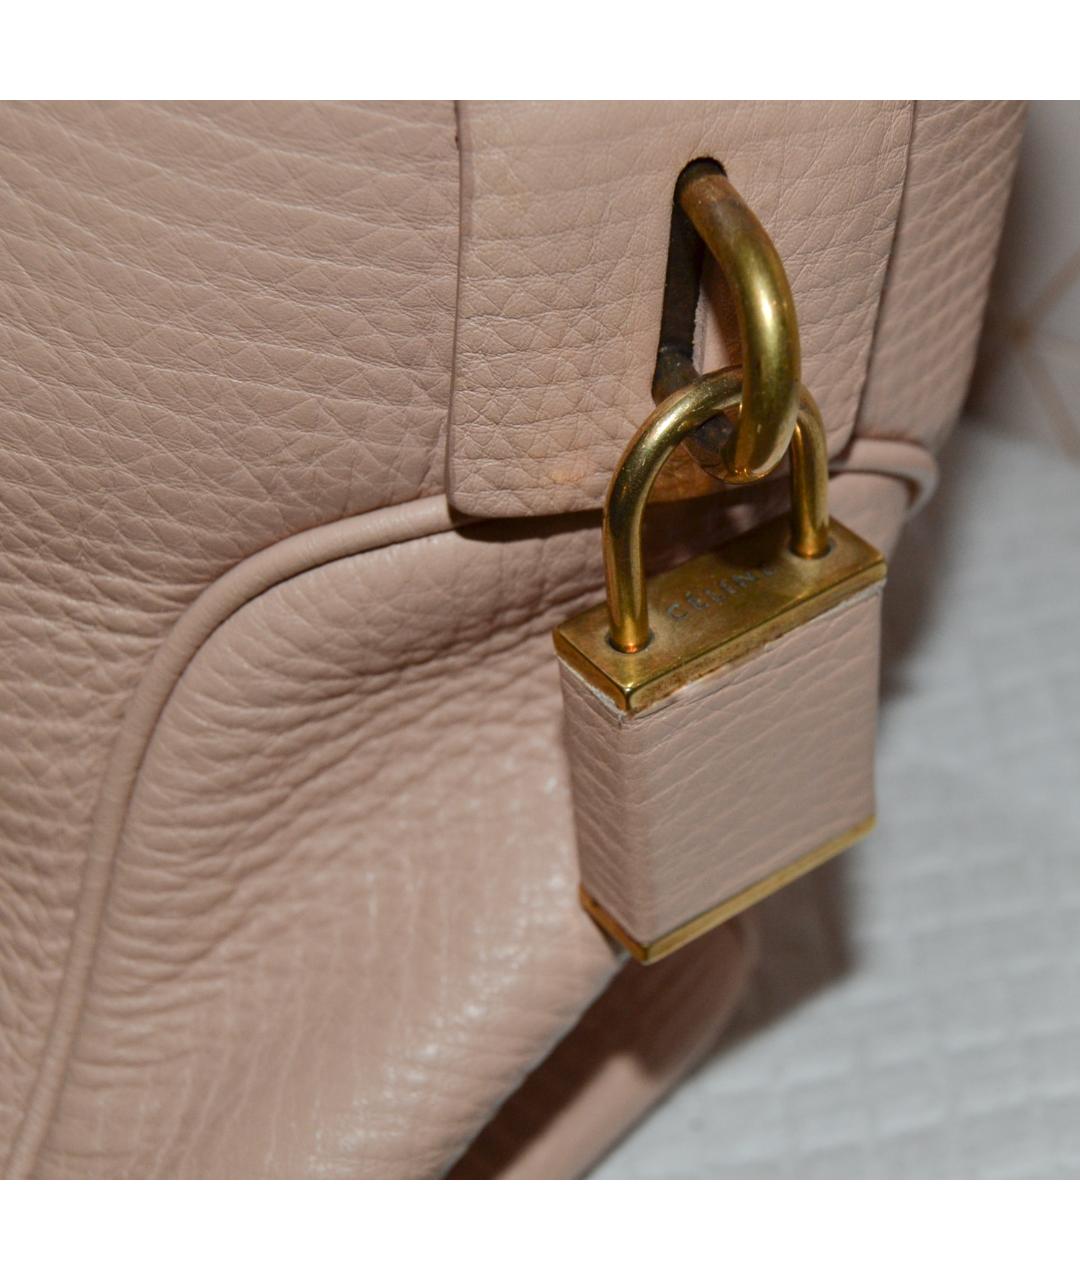 CELINE PRE-OWNED Розовая кожаная сумка с короткими ручками, фото 7